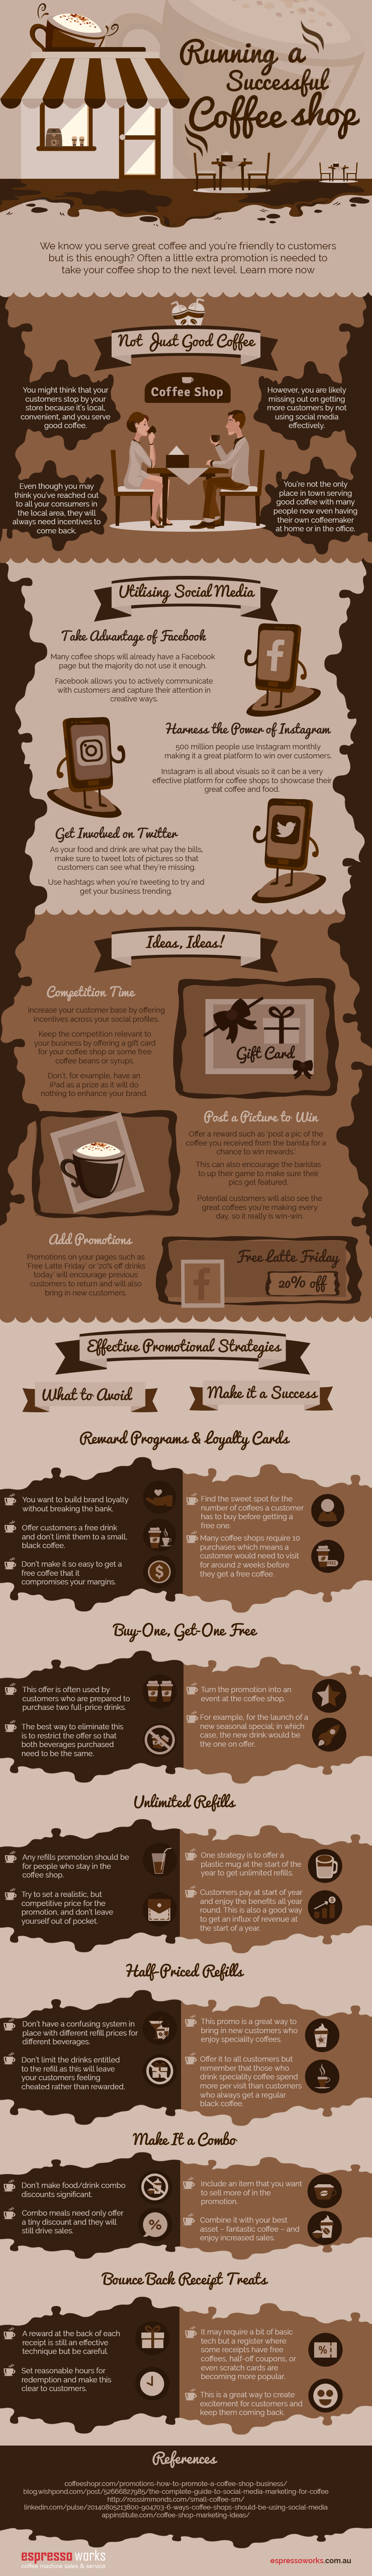 Coffee Shop Social Media Strategy